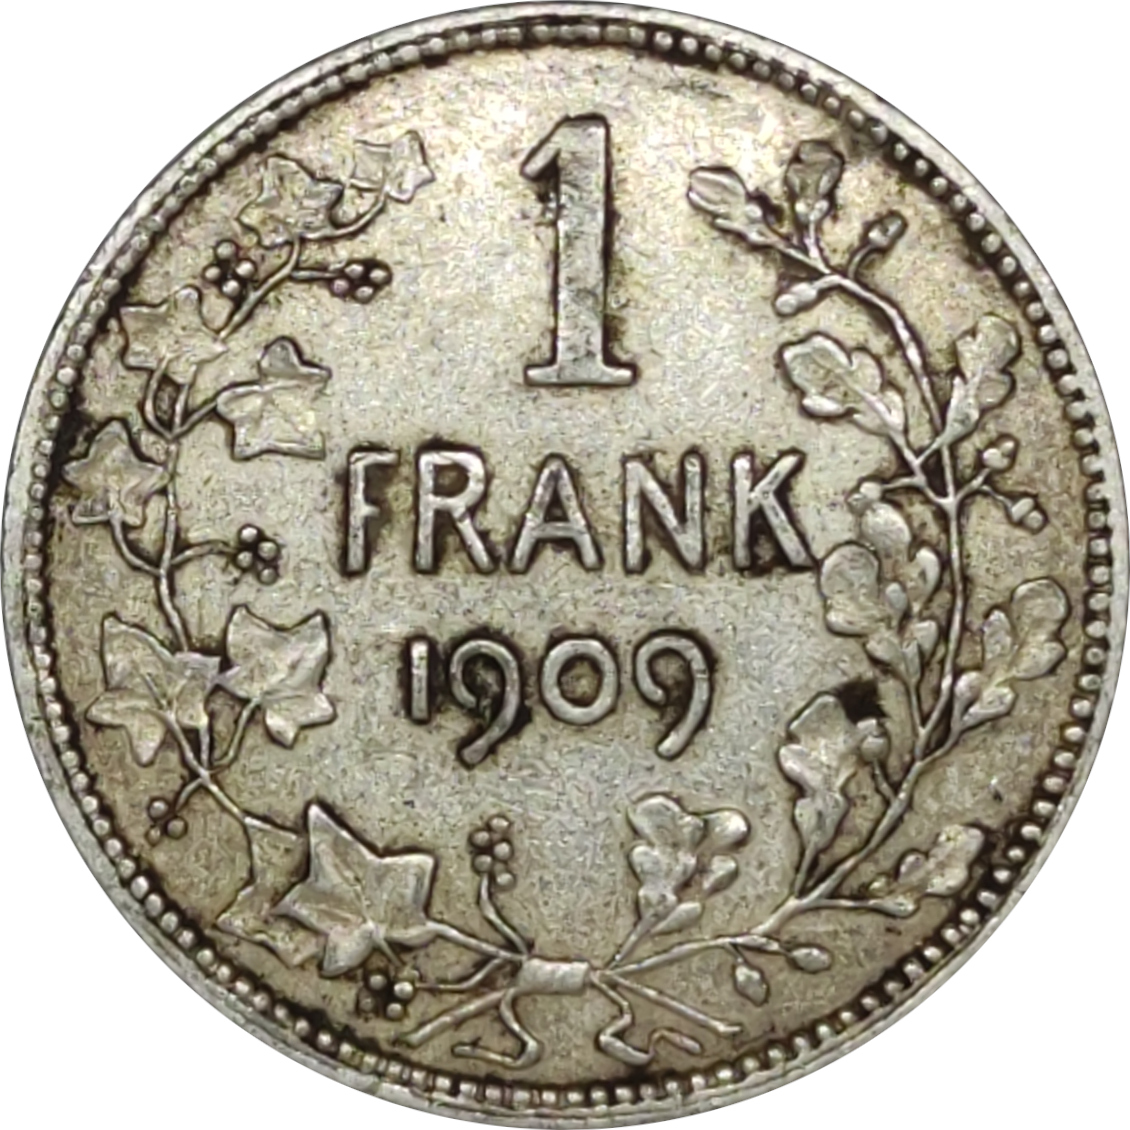 1 franc - Leopold II - Old head